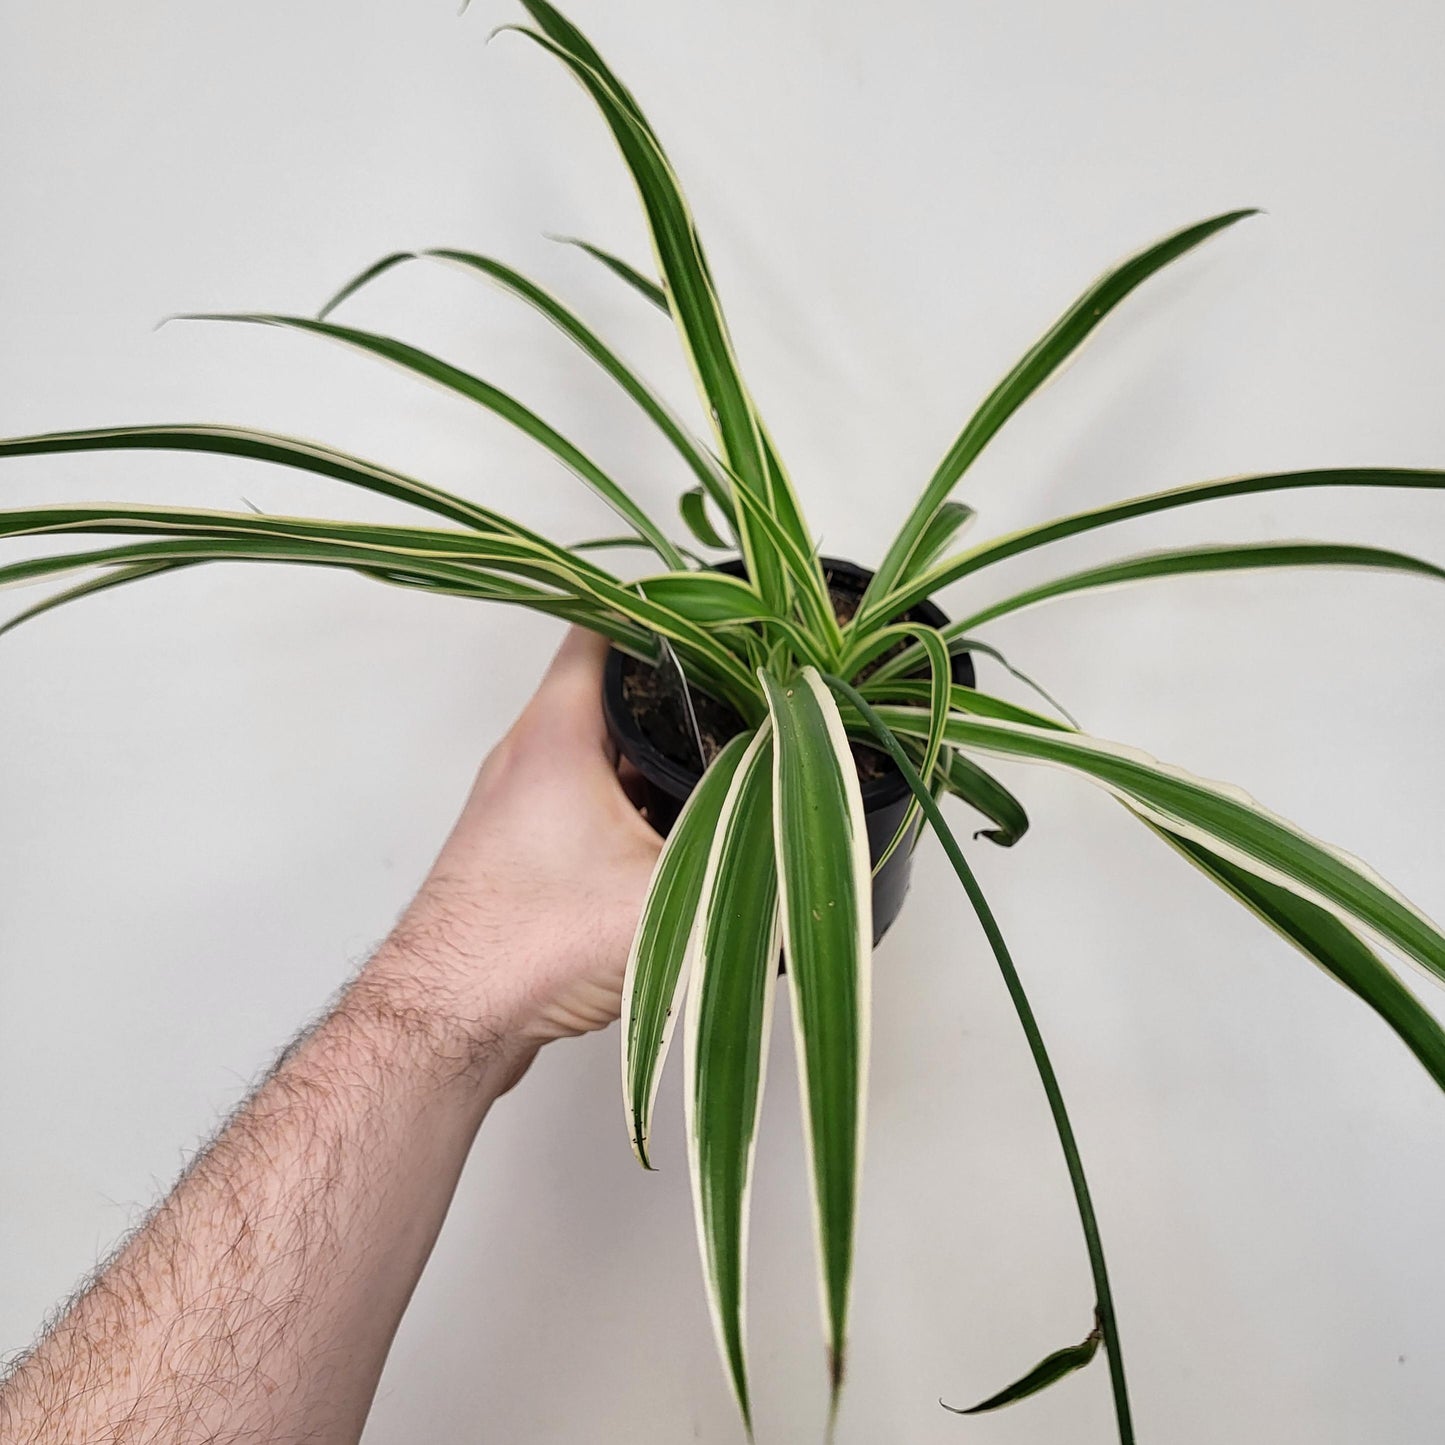 Chlorophytum comosum 'Ocean' - 'Ocean' Spider Plant